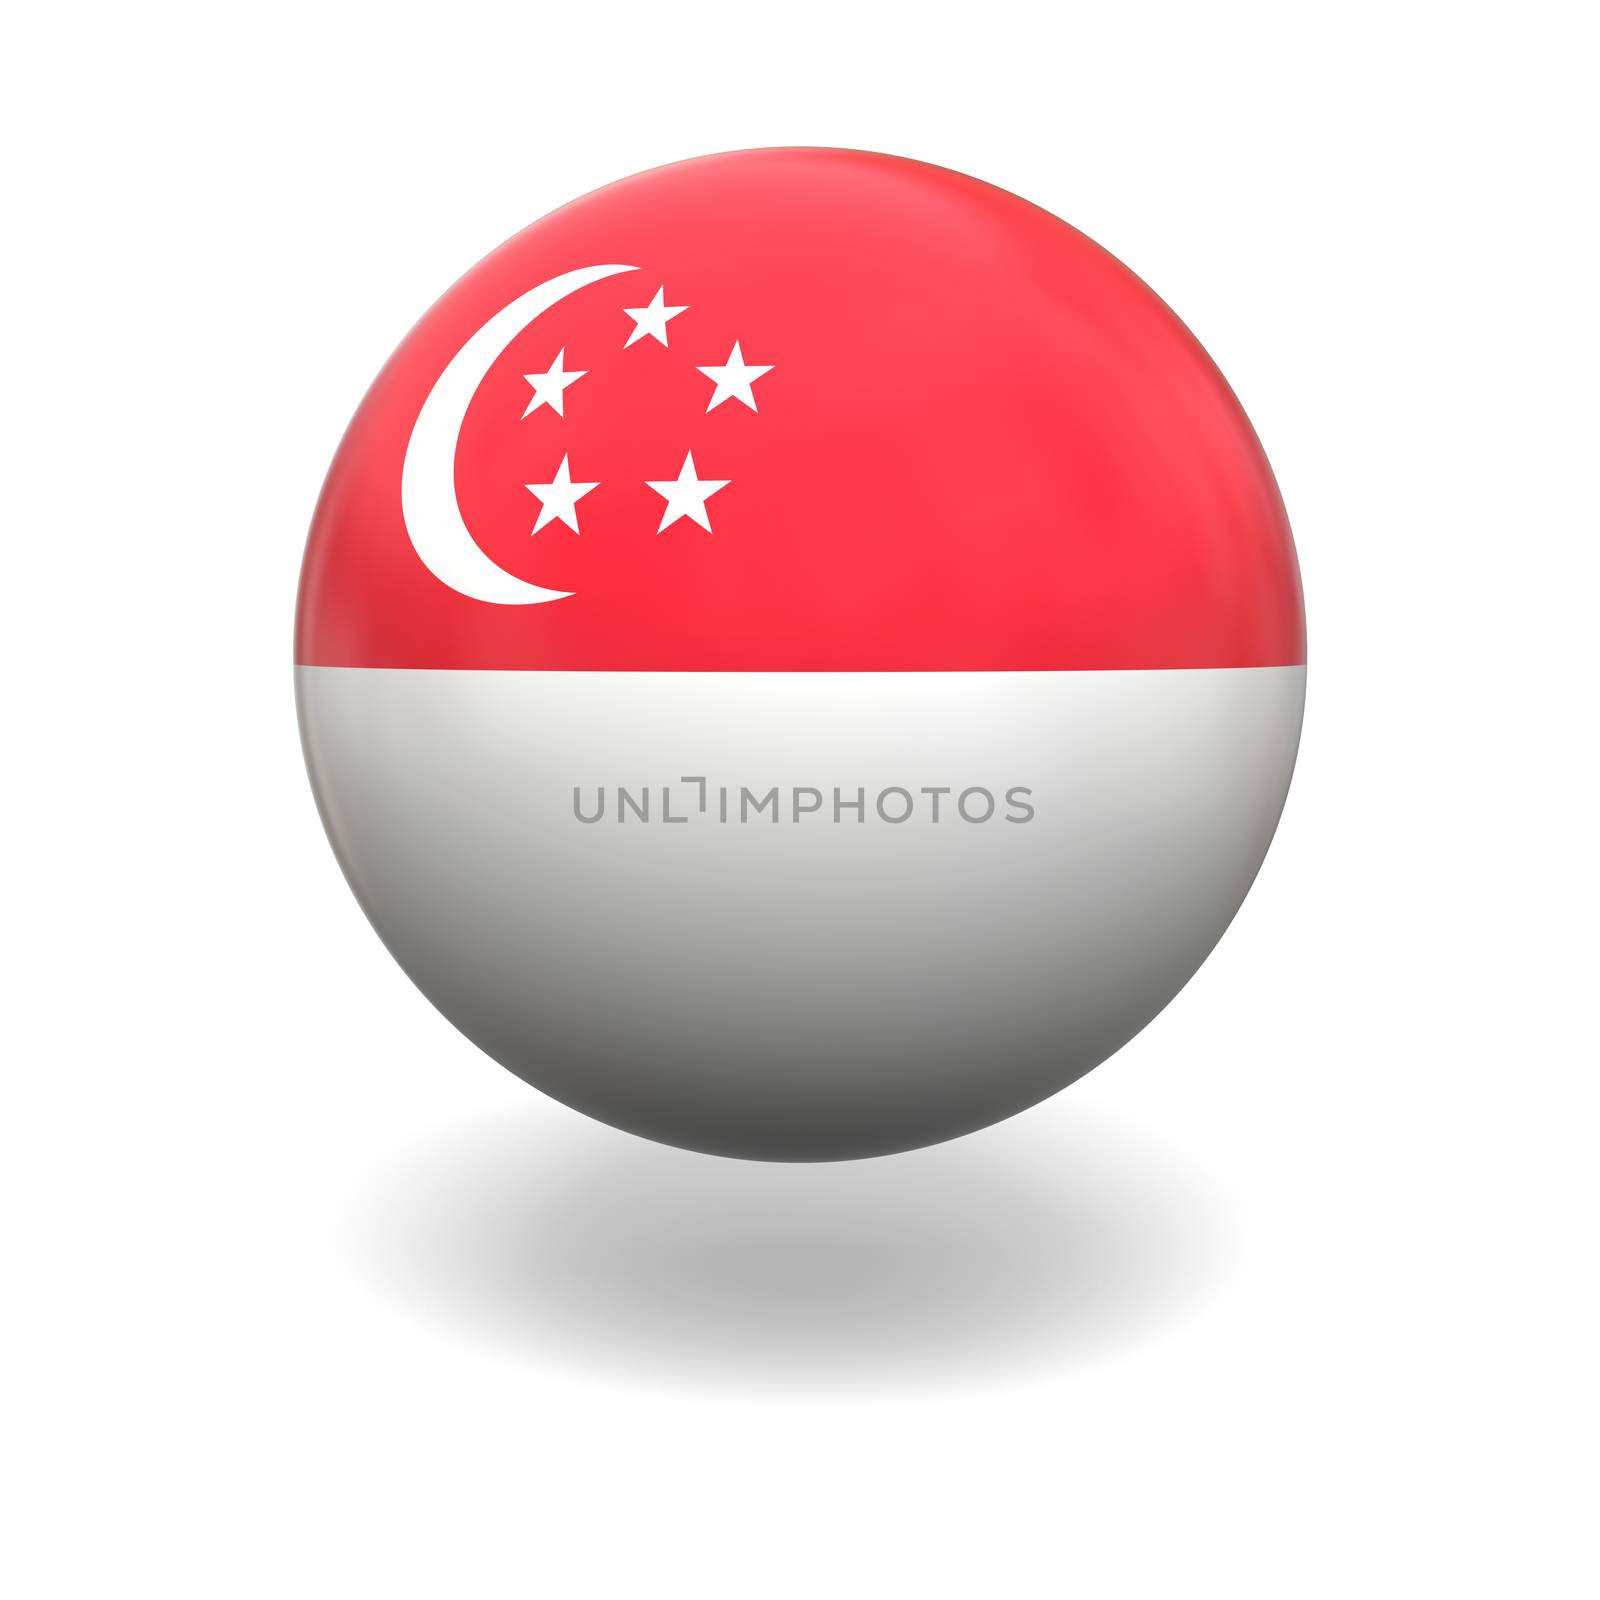 Singapore flag by Harvepino